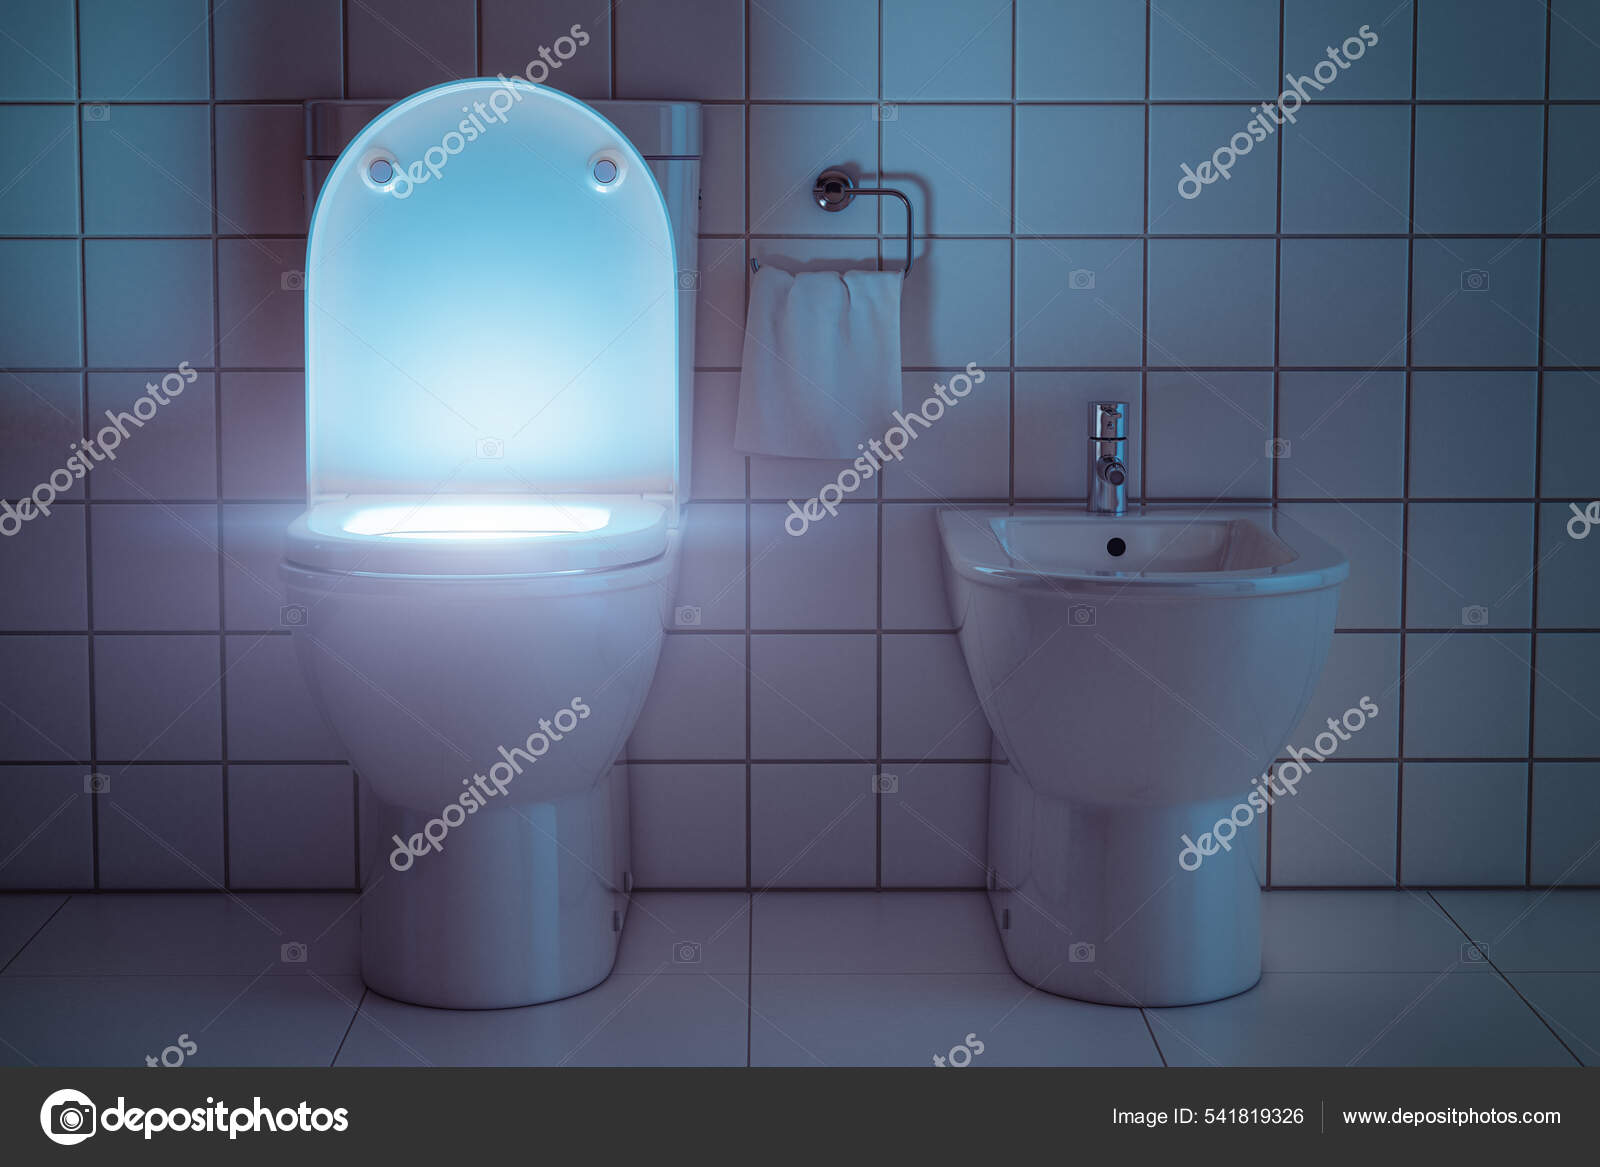 https://st.depositphotos.com/1001877/54181/i/1600/depositphotos_541819326-stock-photo-mysterious-light-toilet-bowl-night.jpg